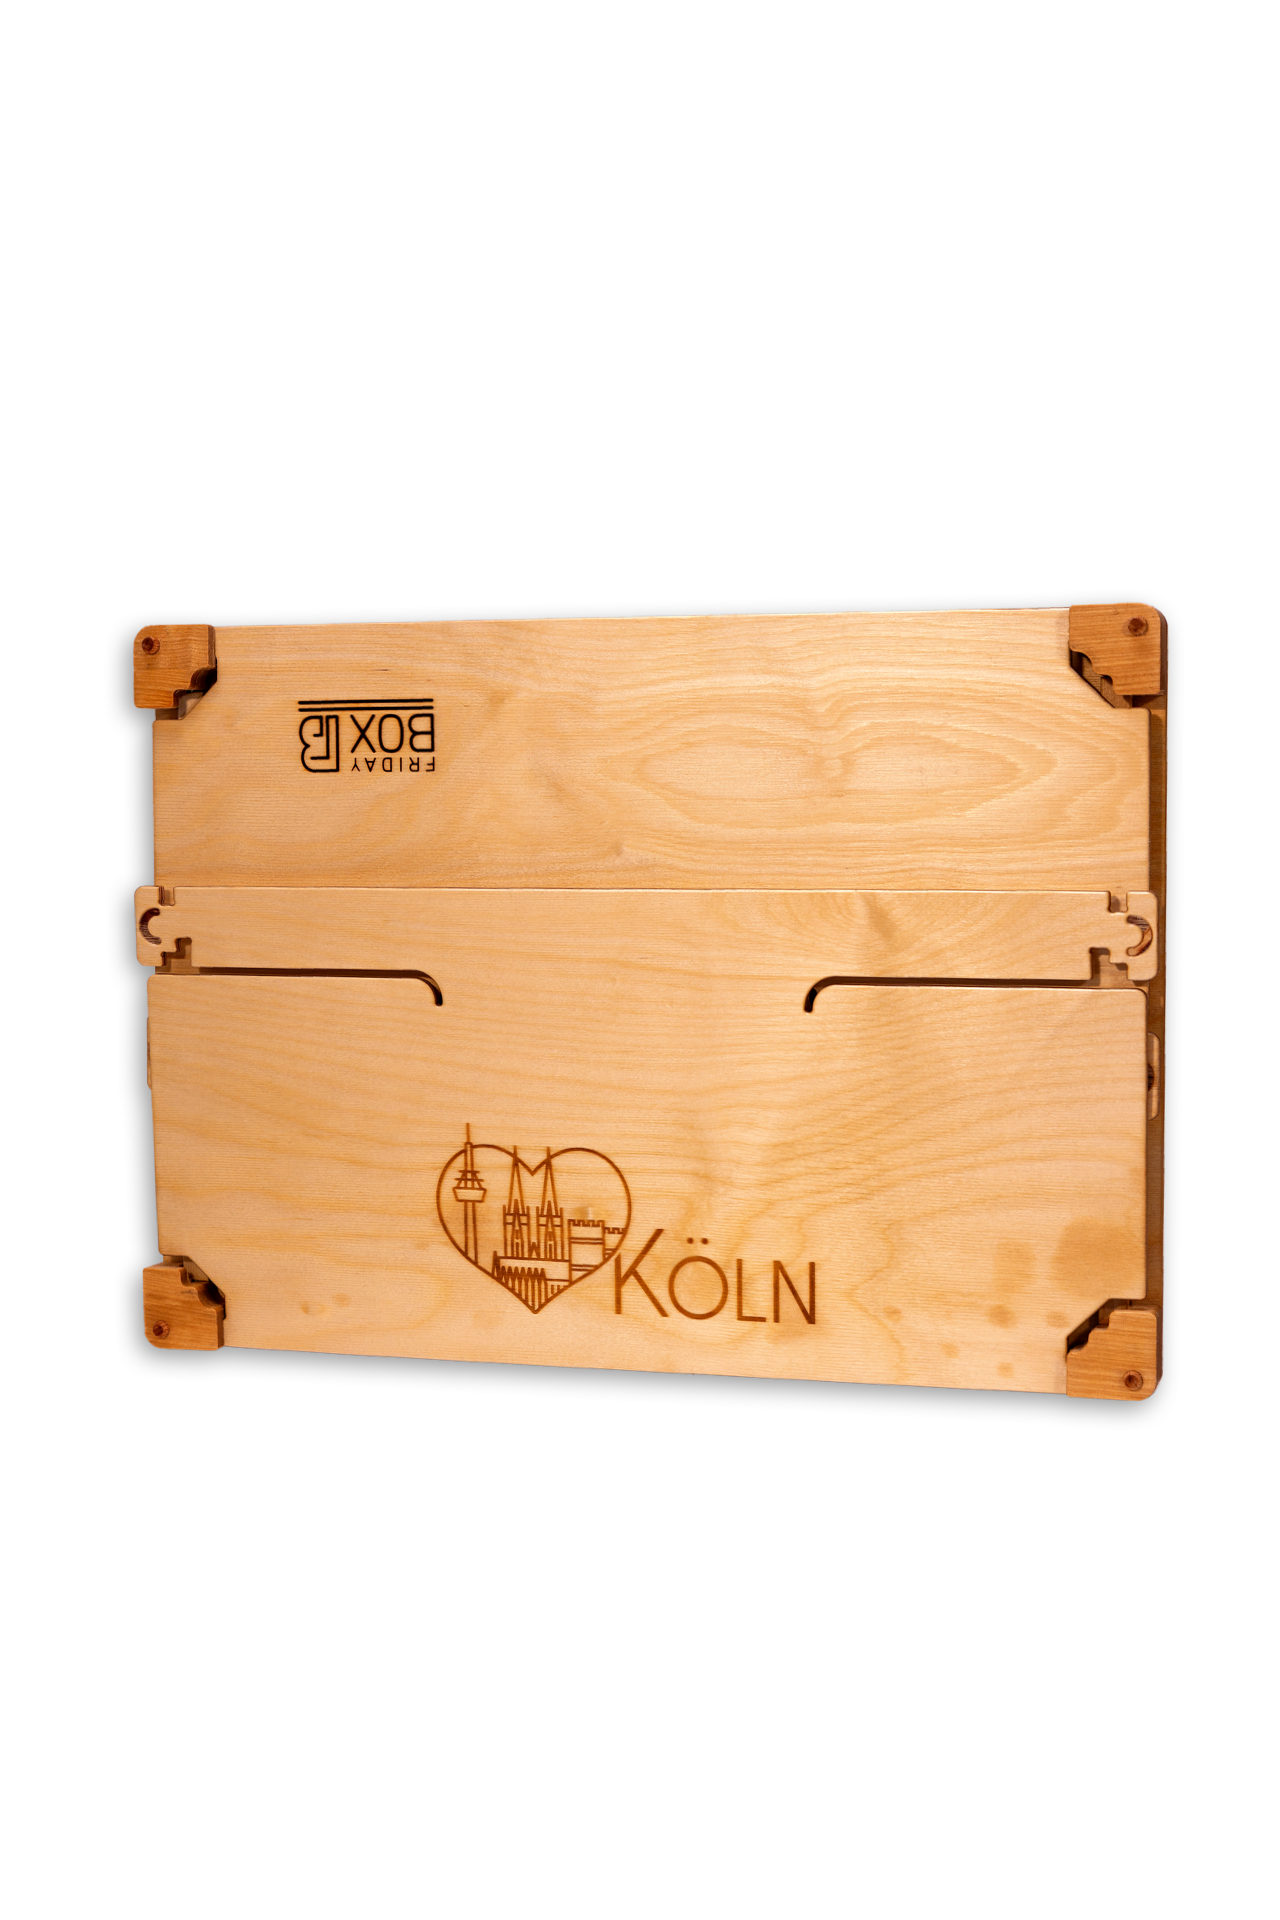 Faltbare Holzbox Köln Edition IMG_6832